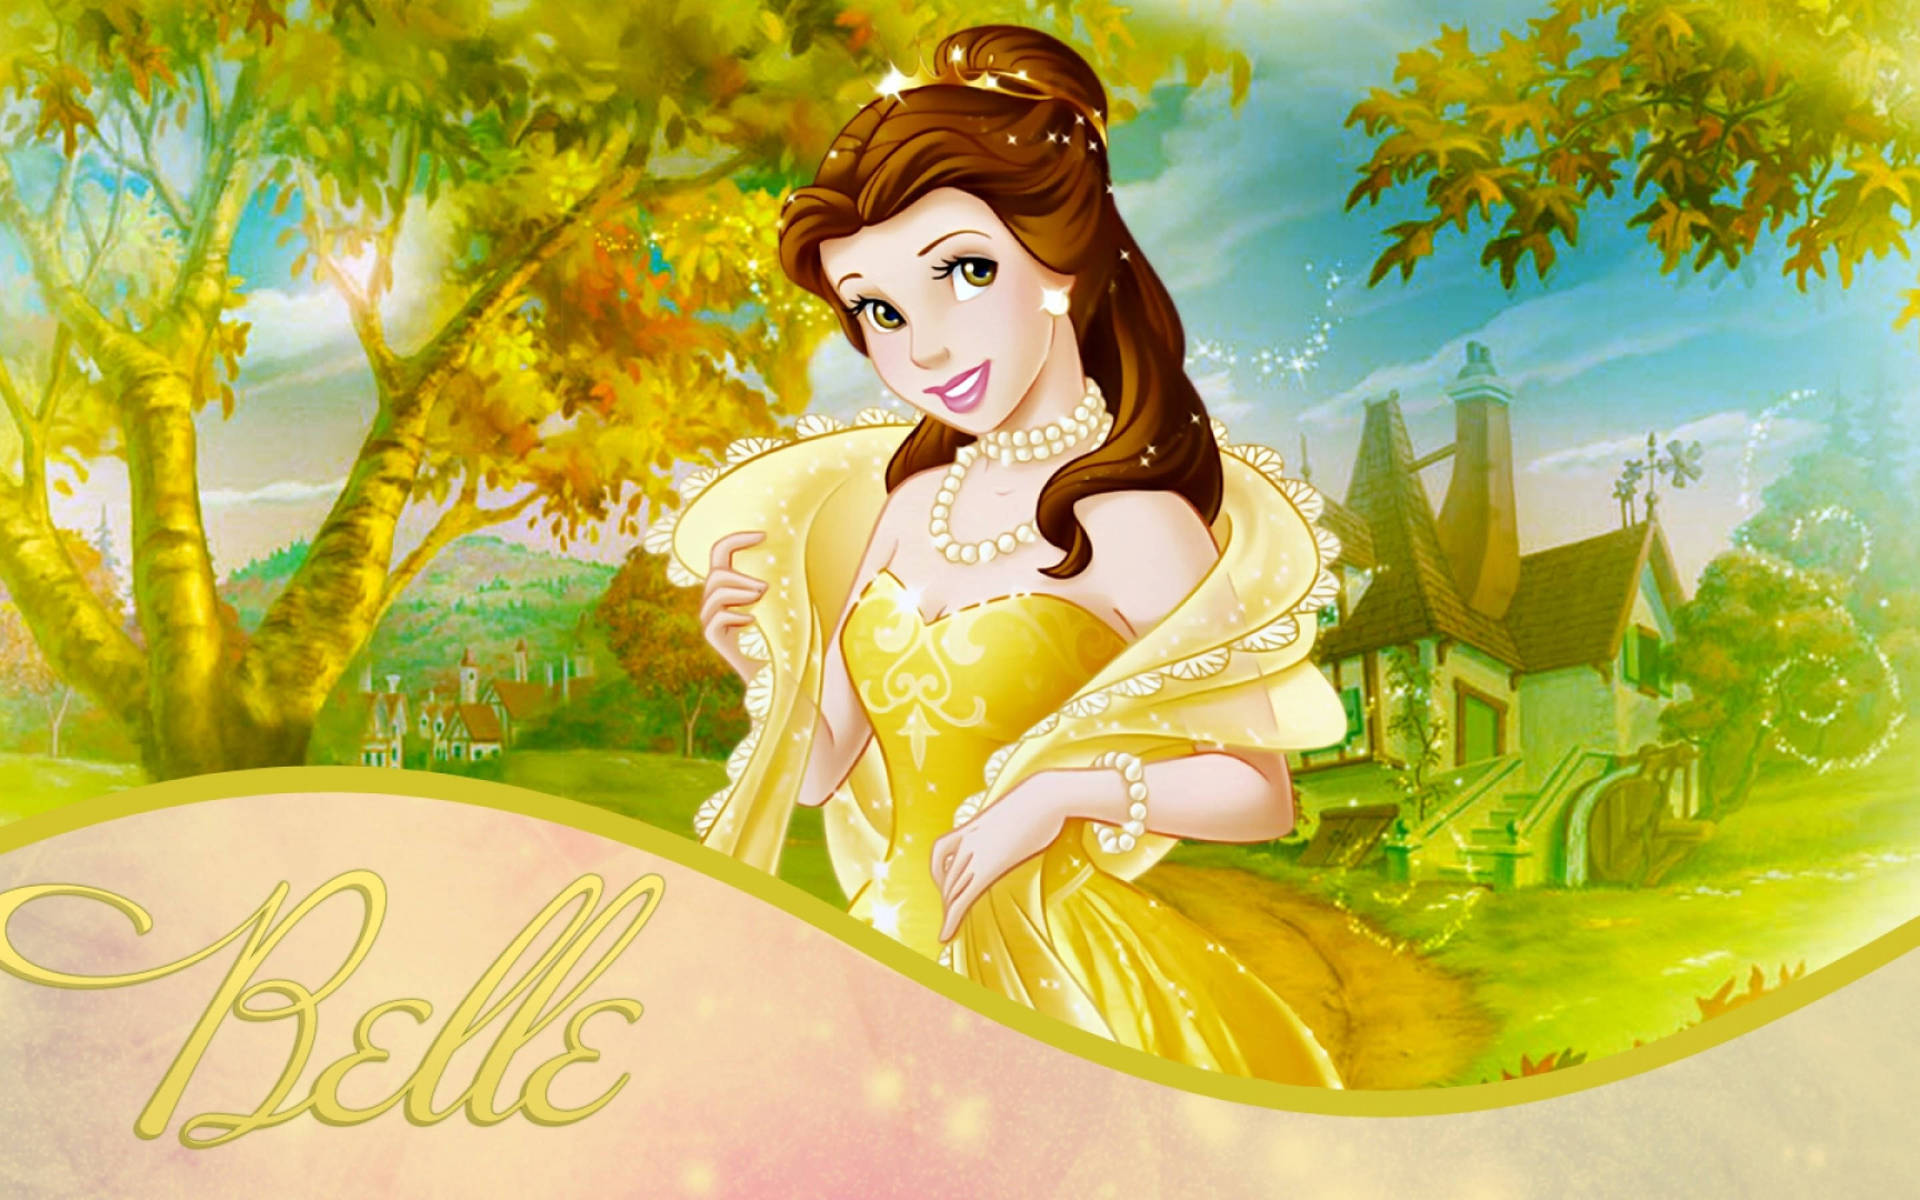 Enchanting Princess Belle In Elegant Yellow Gown